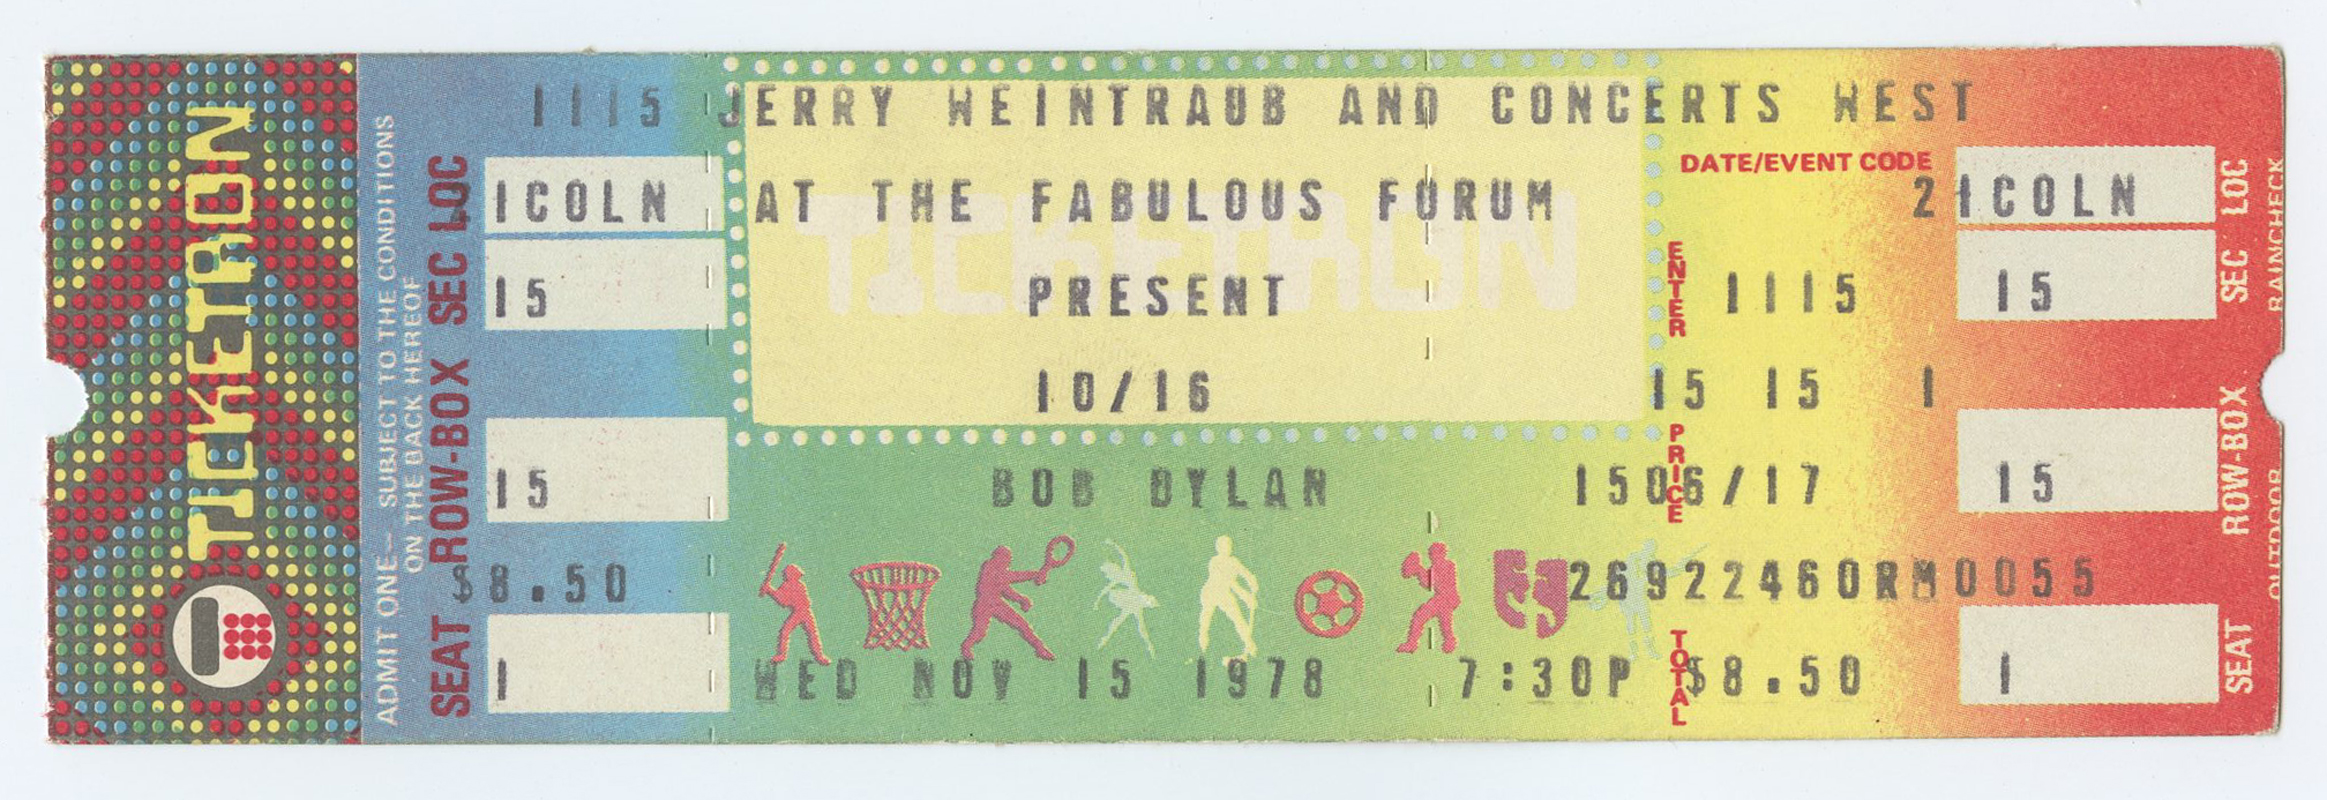 Bob Dylan Vintage Ticket 1978 Nov 15 Fabulous Forum  